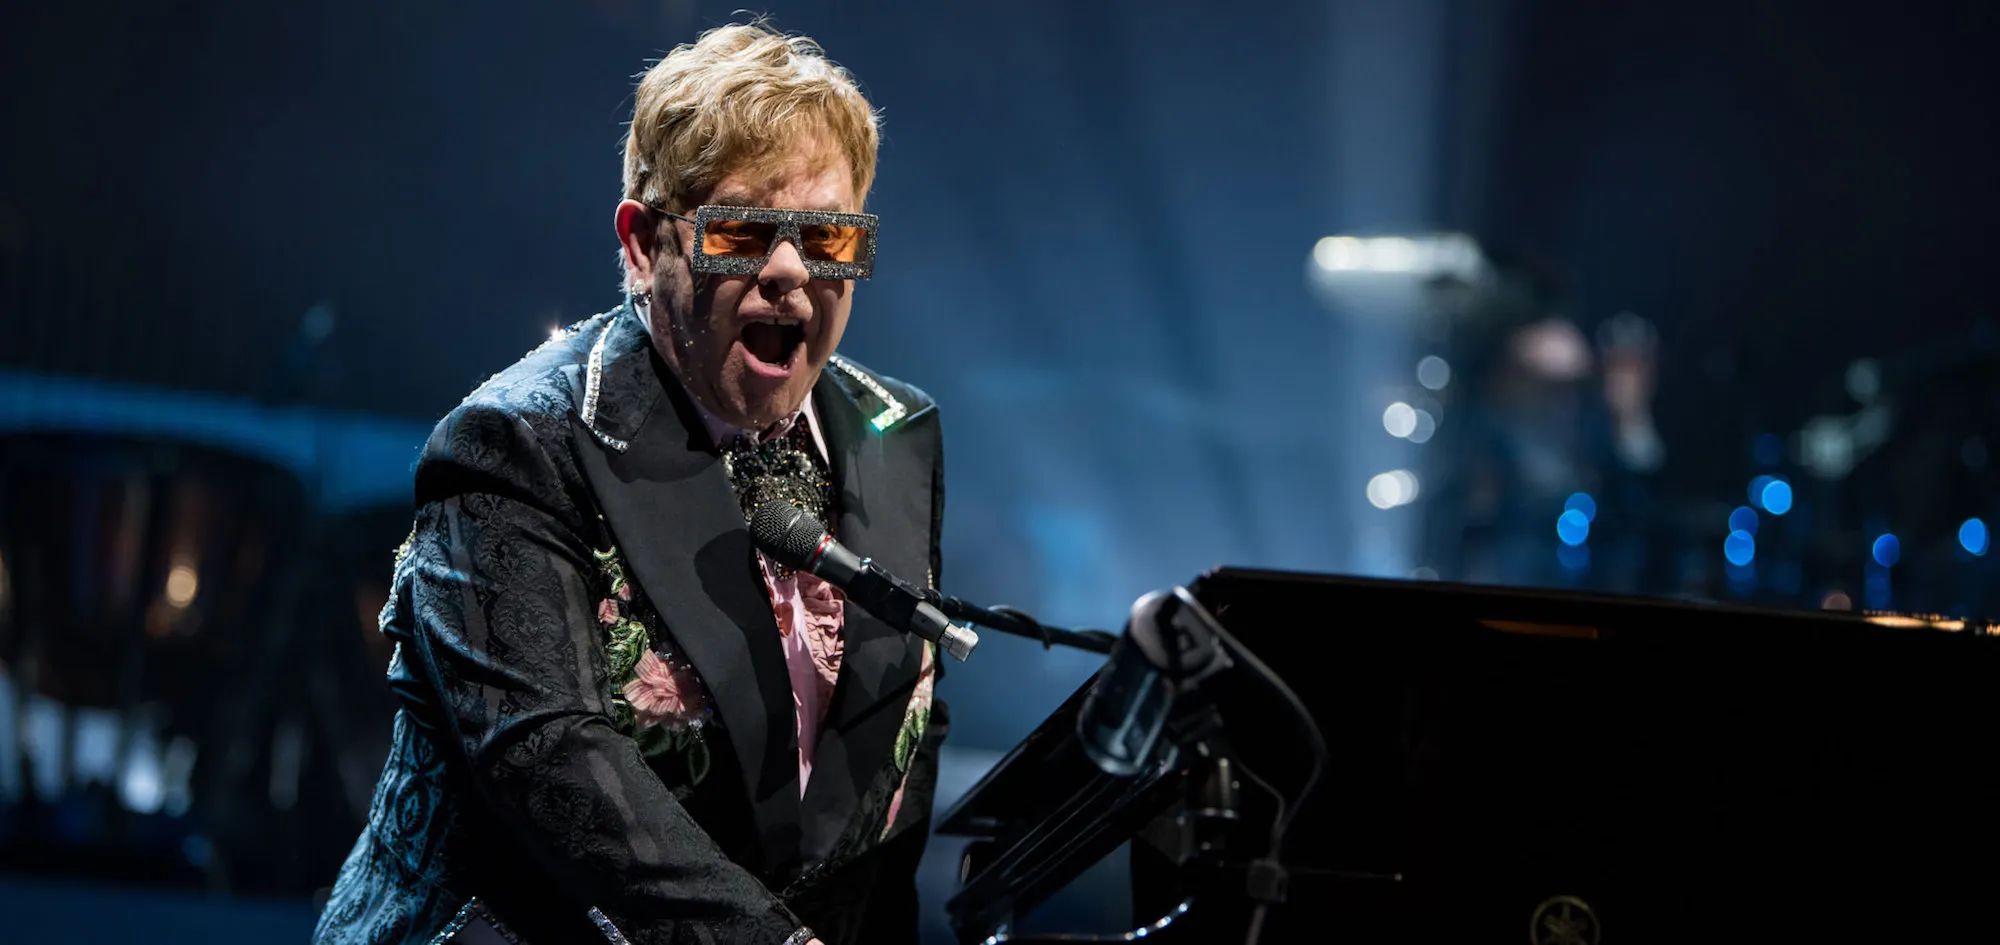 Elton John Remembers Queen Elizabeth at Toronto Show—“Her Spirit Lives On”